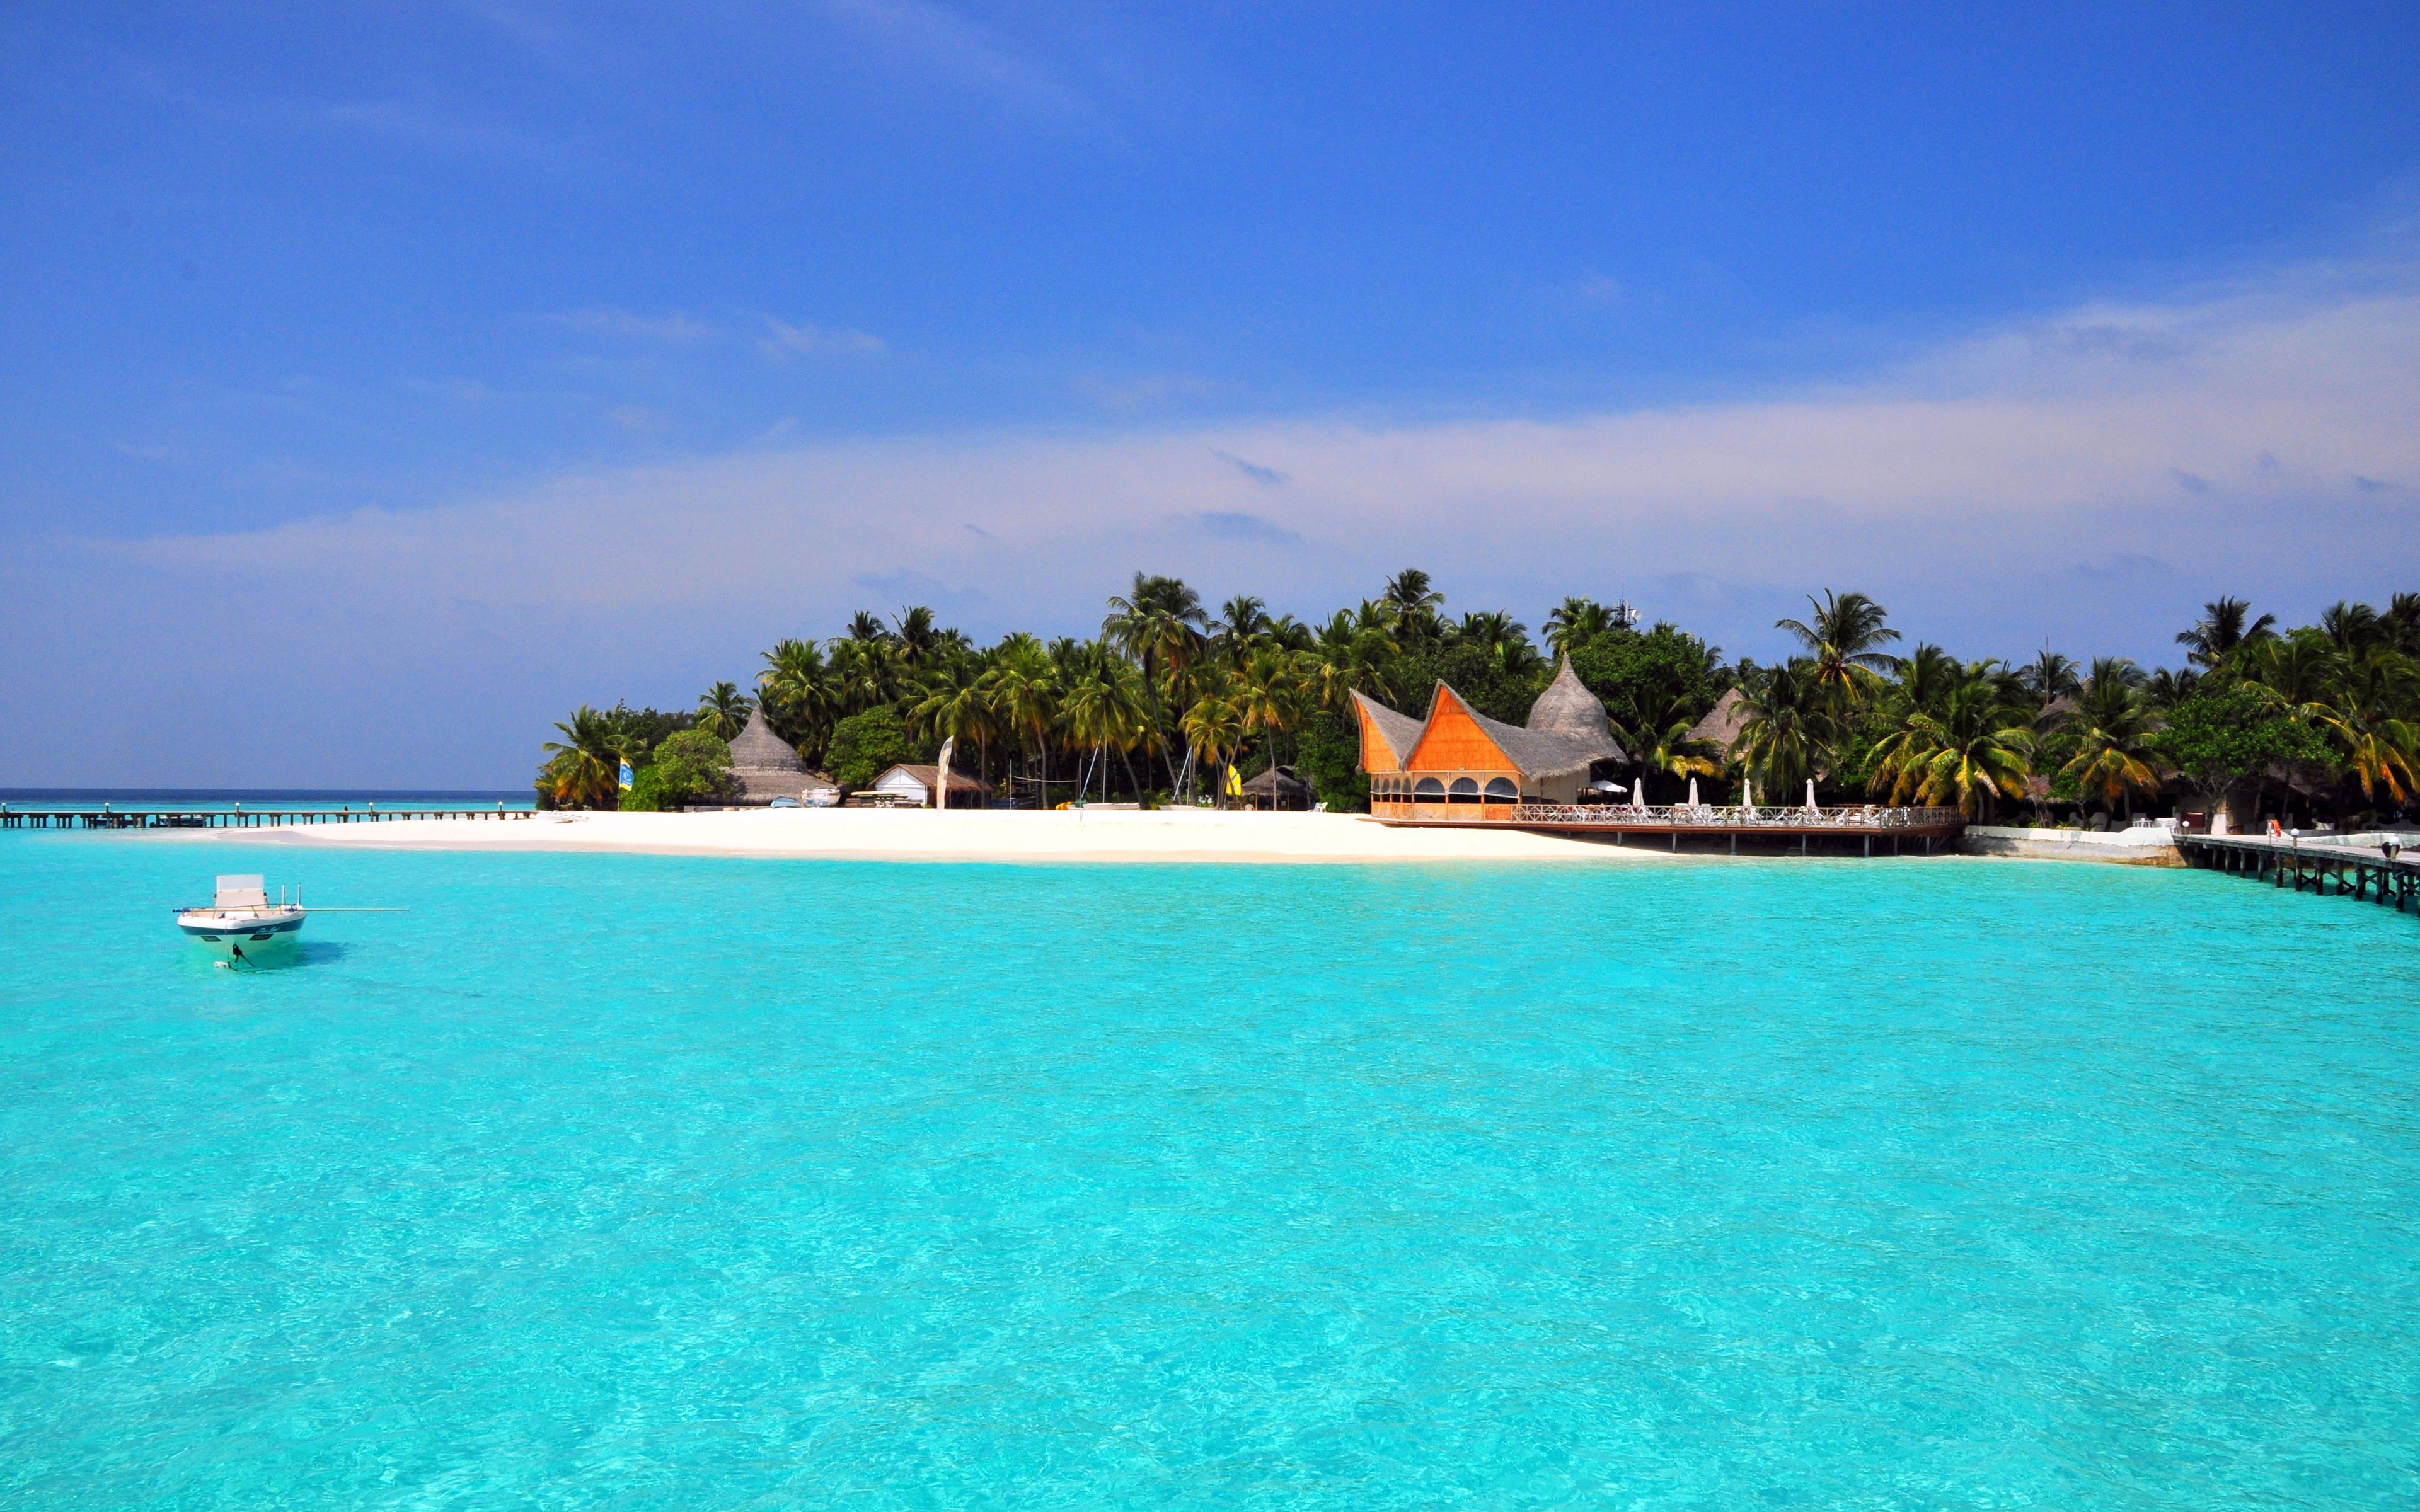 Download wallpaper 3840x2400 maldives, tropical, beach, island 4k ultra HD 16:10 HD background